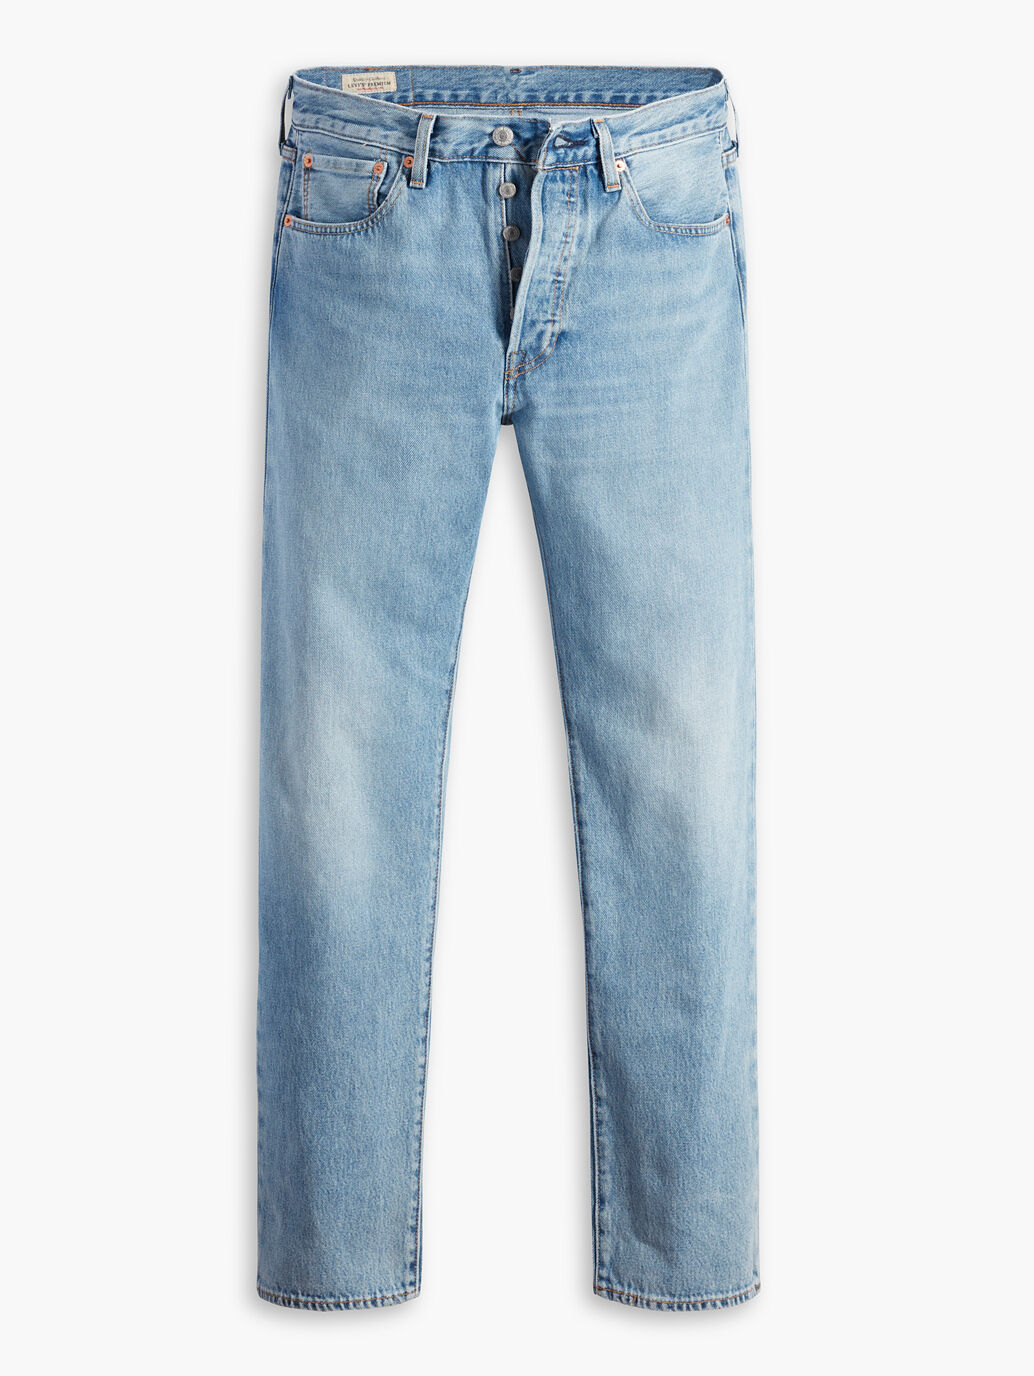 501® Original Jeans in Glassy Waves